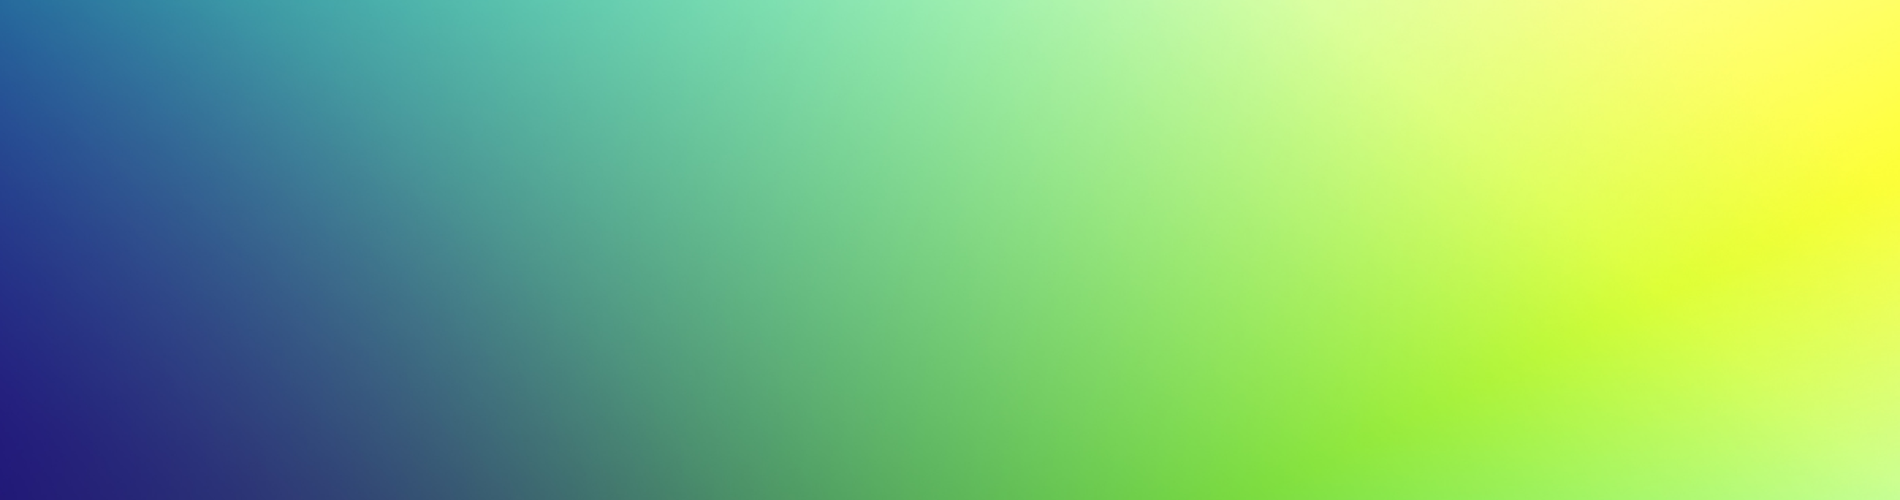 blue green gradient